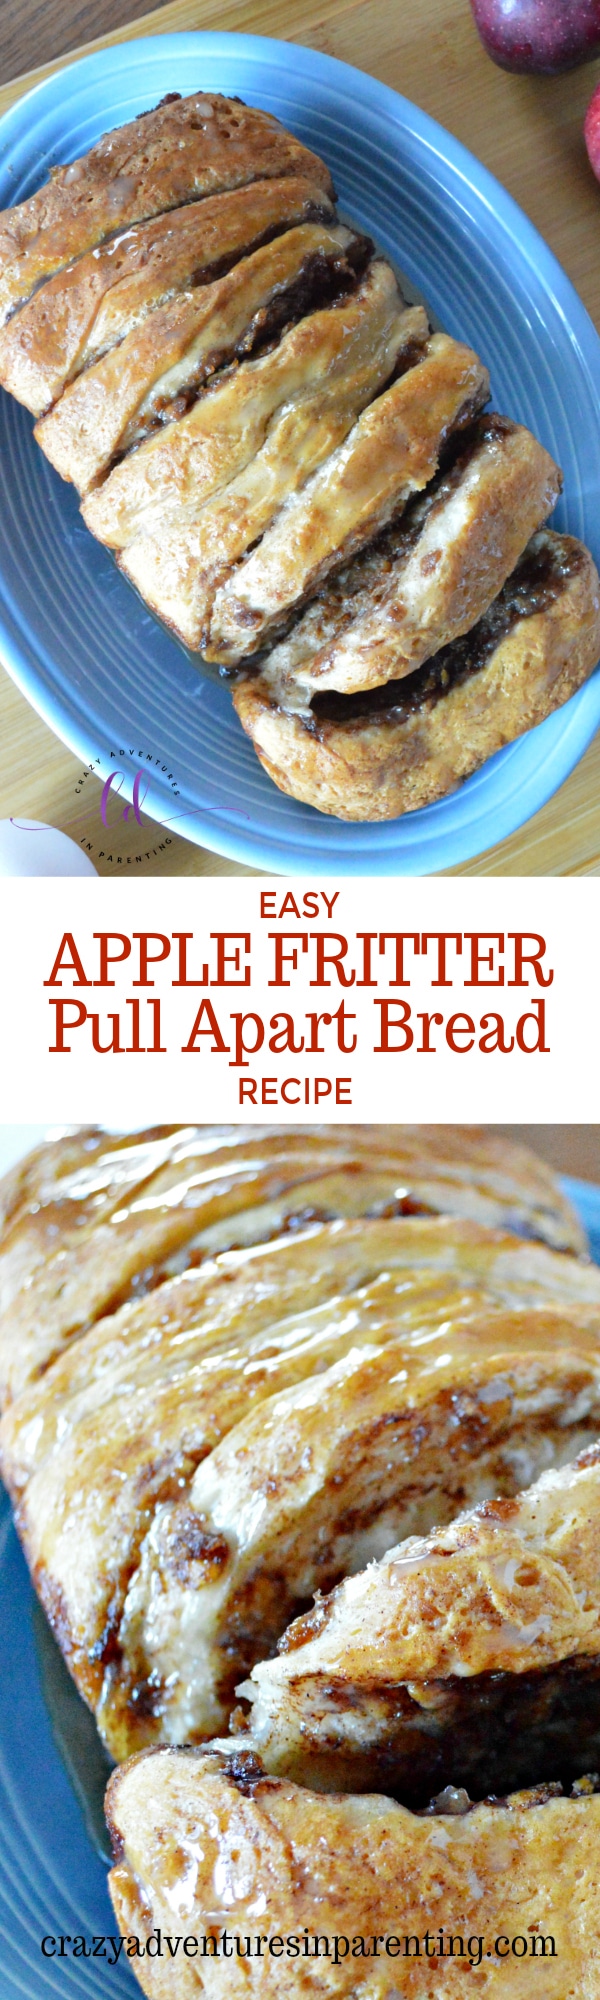 Easy Apple Fritter Pull Apart Bread Recipe